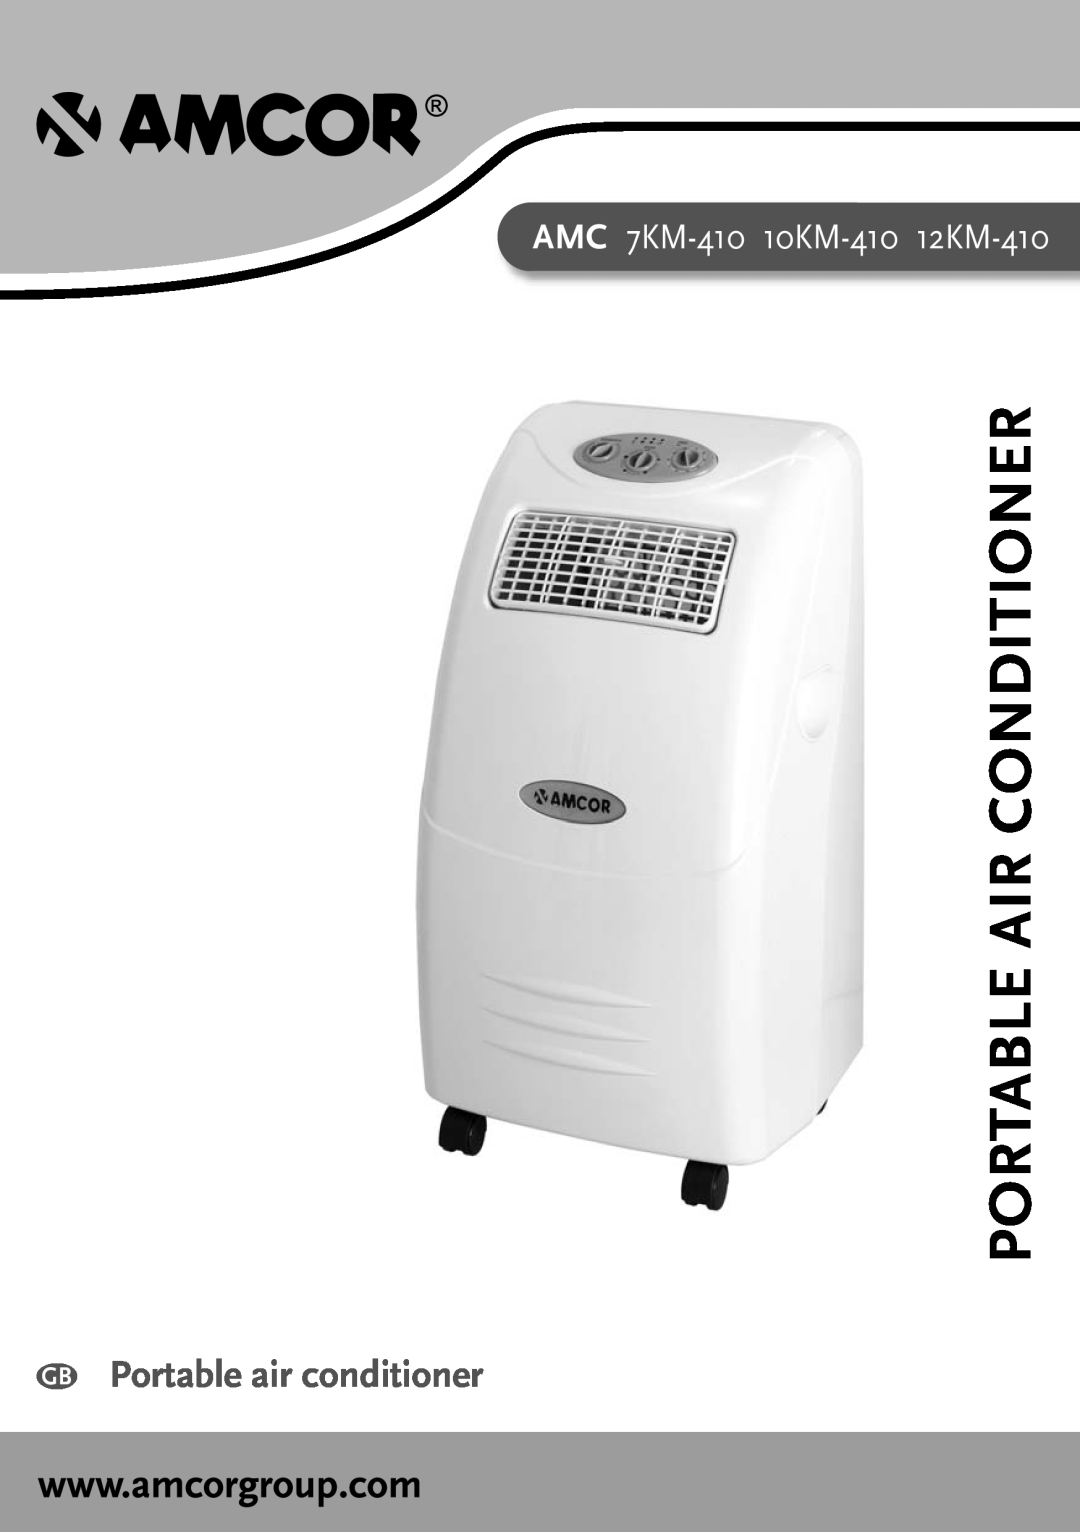 Amcor AMC 10KM-410 manual Portable Air Conditioner, GB Portable air conditioner, AMC 7KM-410 10KM-410 12KM-410 